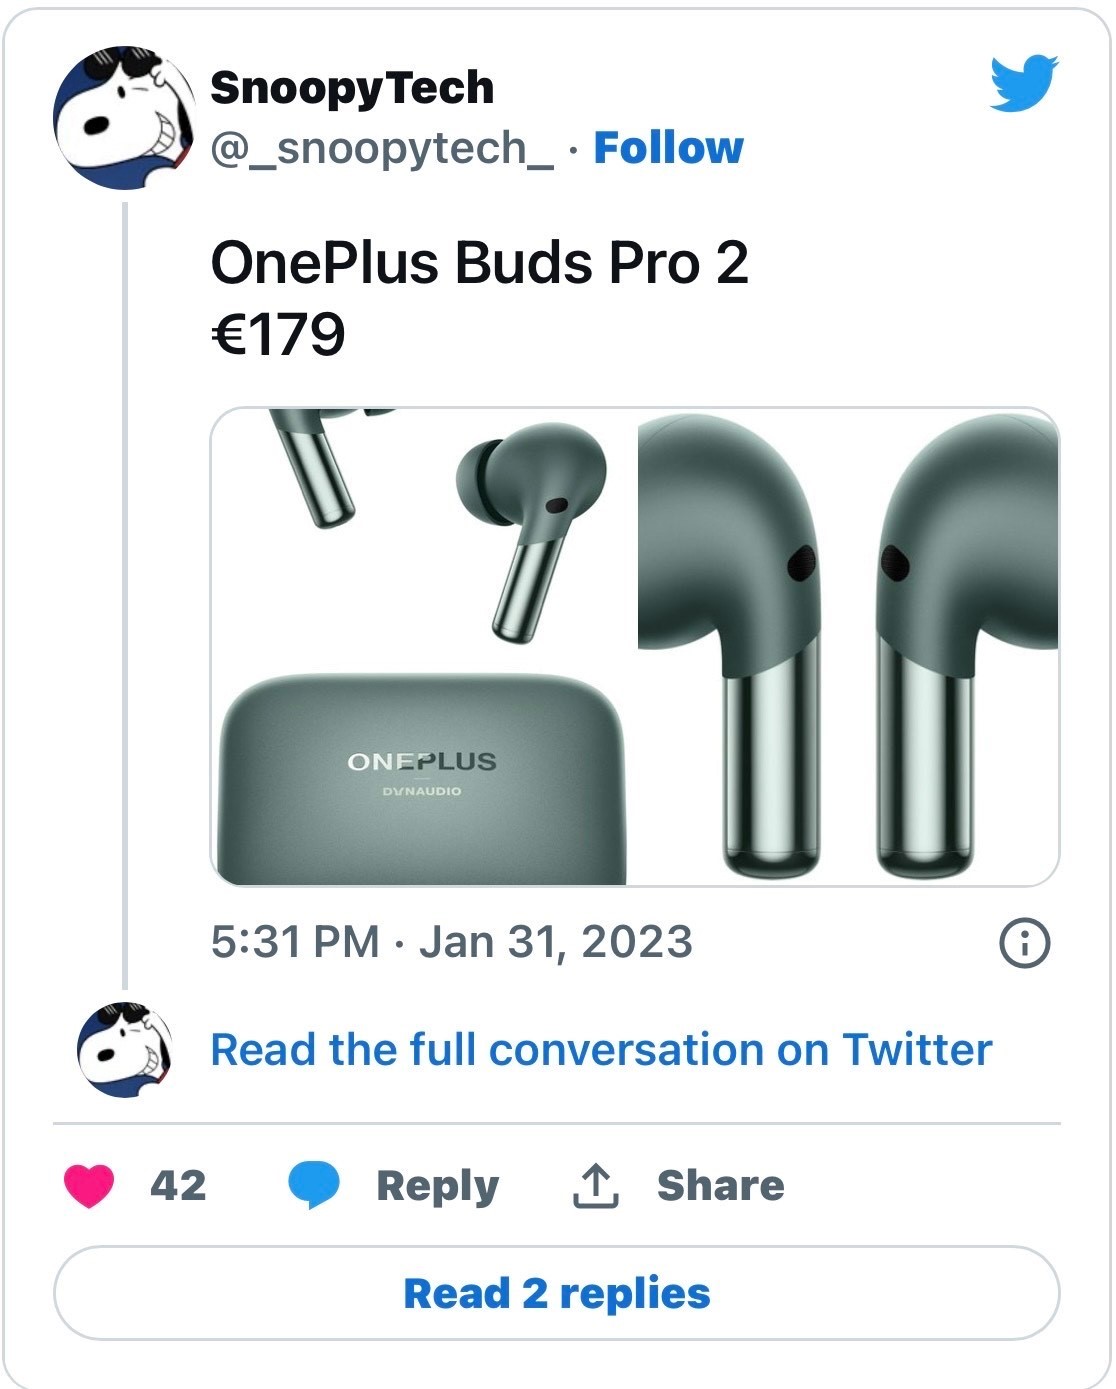 OnePlus Buds Pro 2 specs